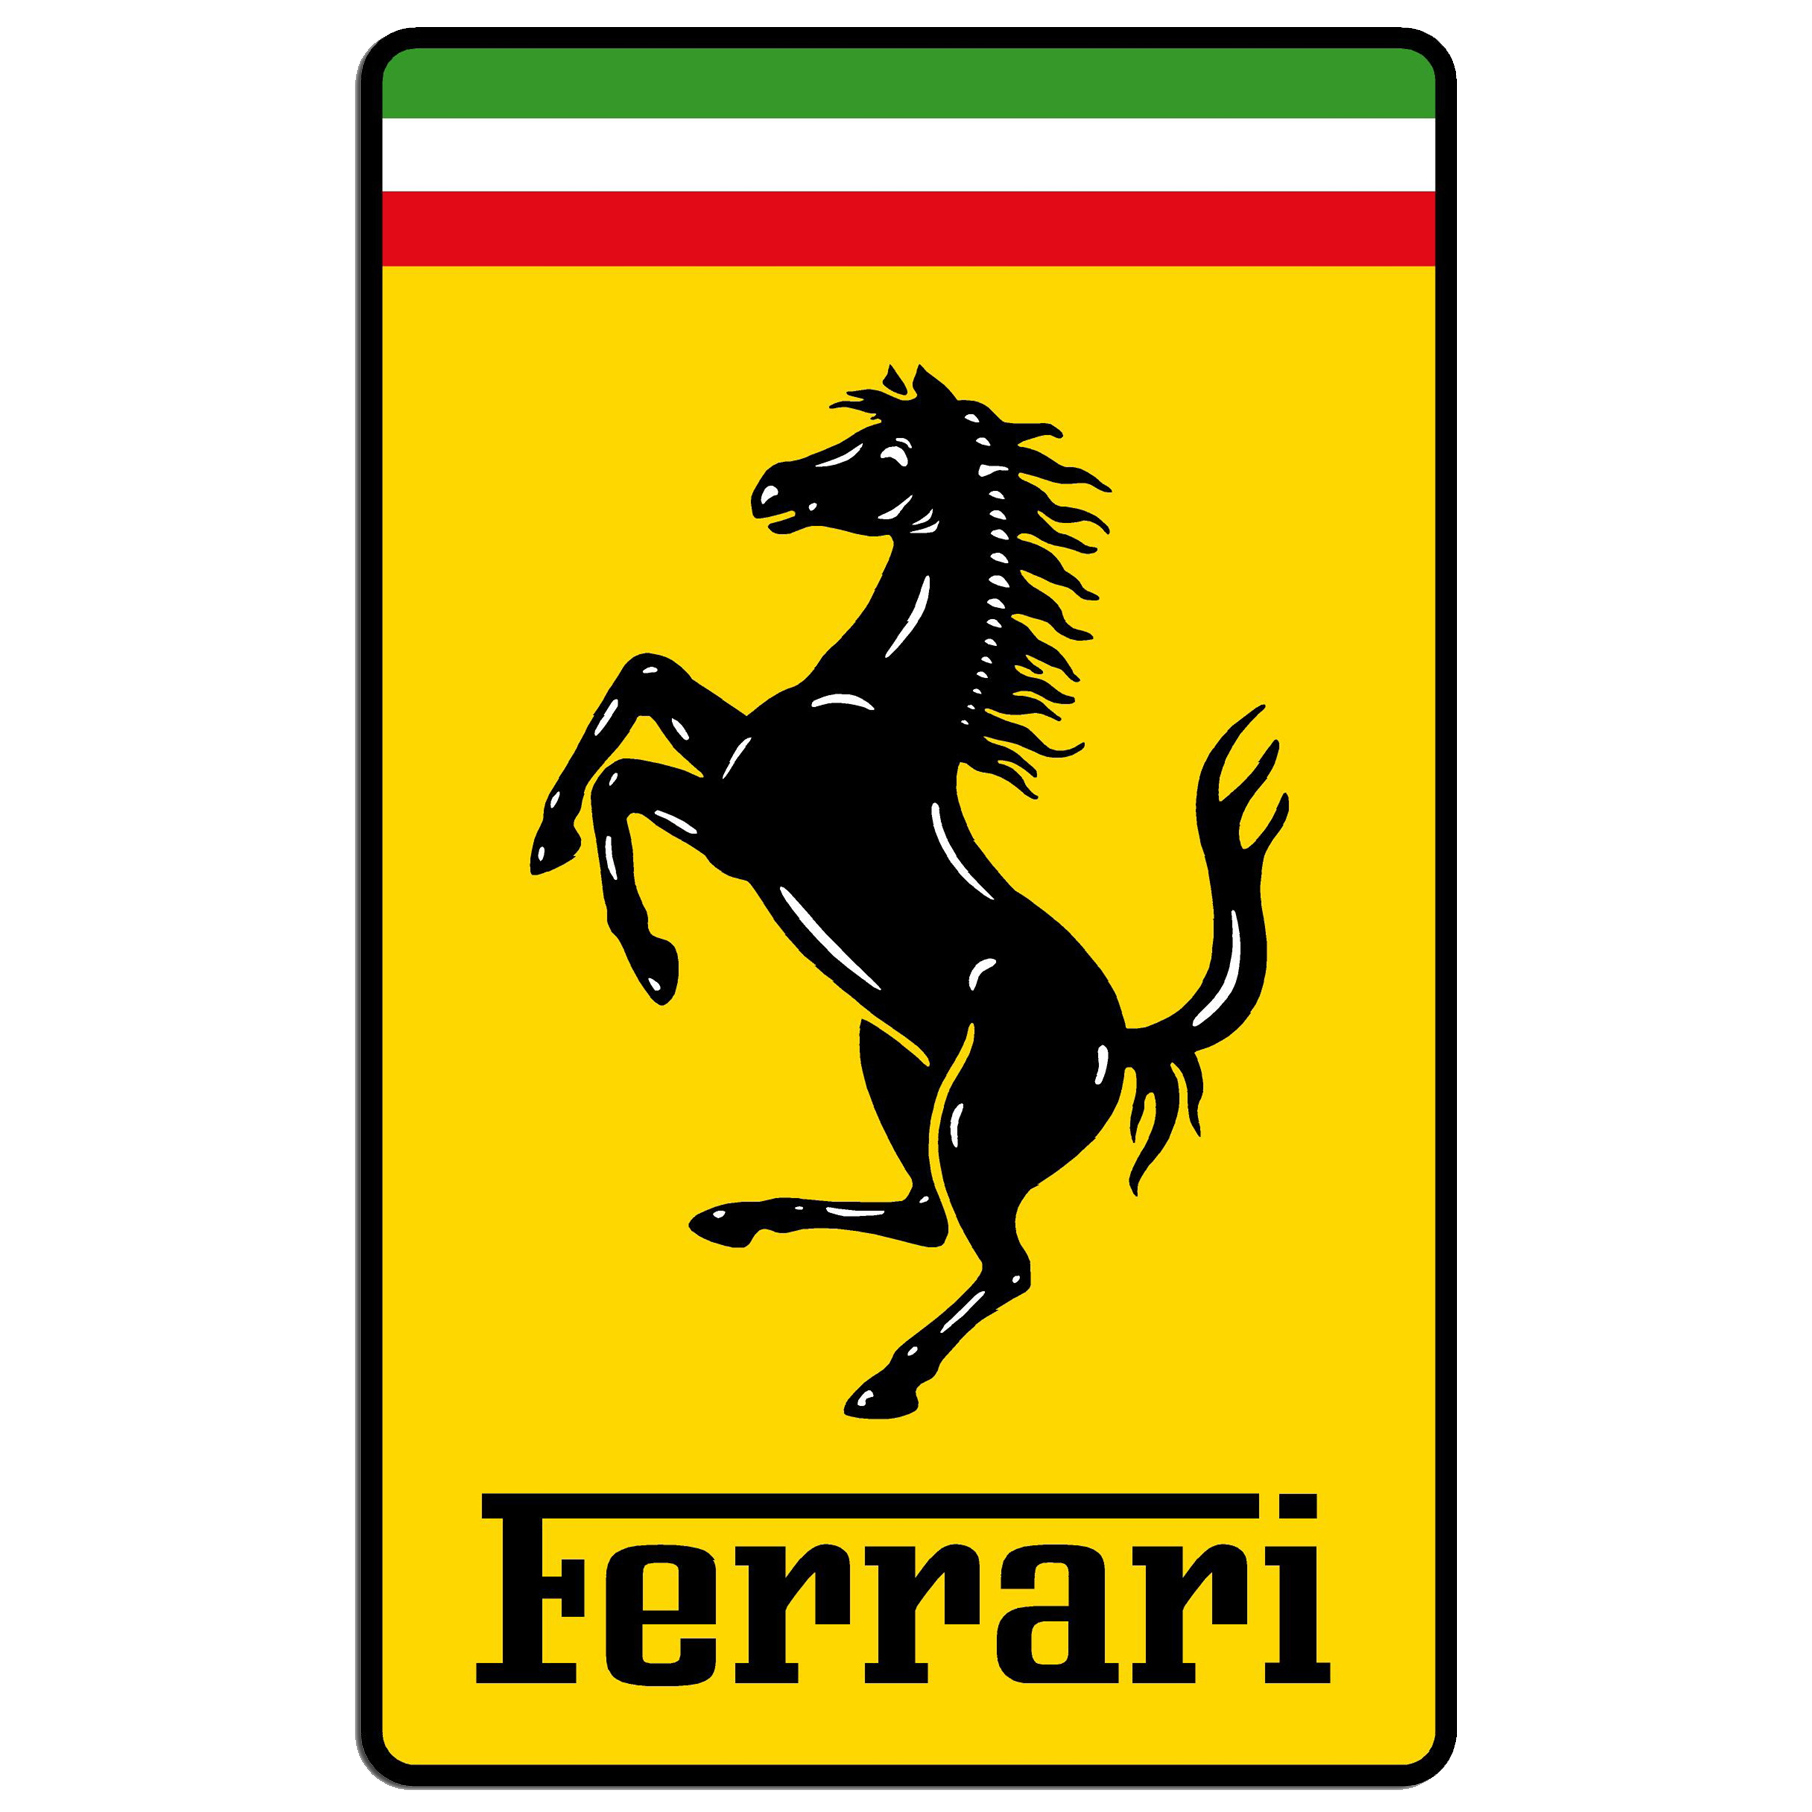 Ferrari 575 (2002 - 2006) for sale